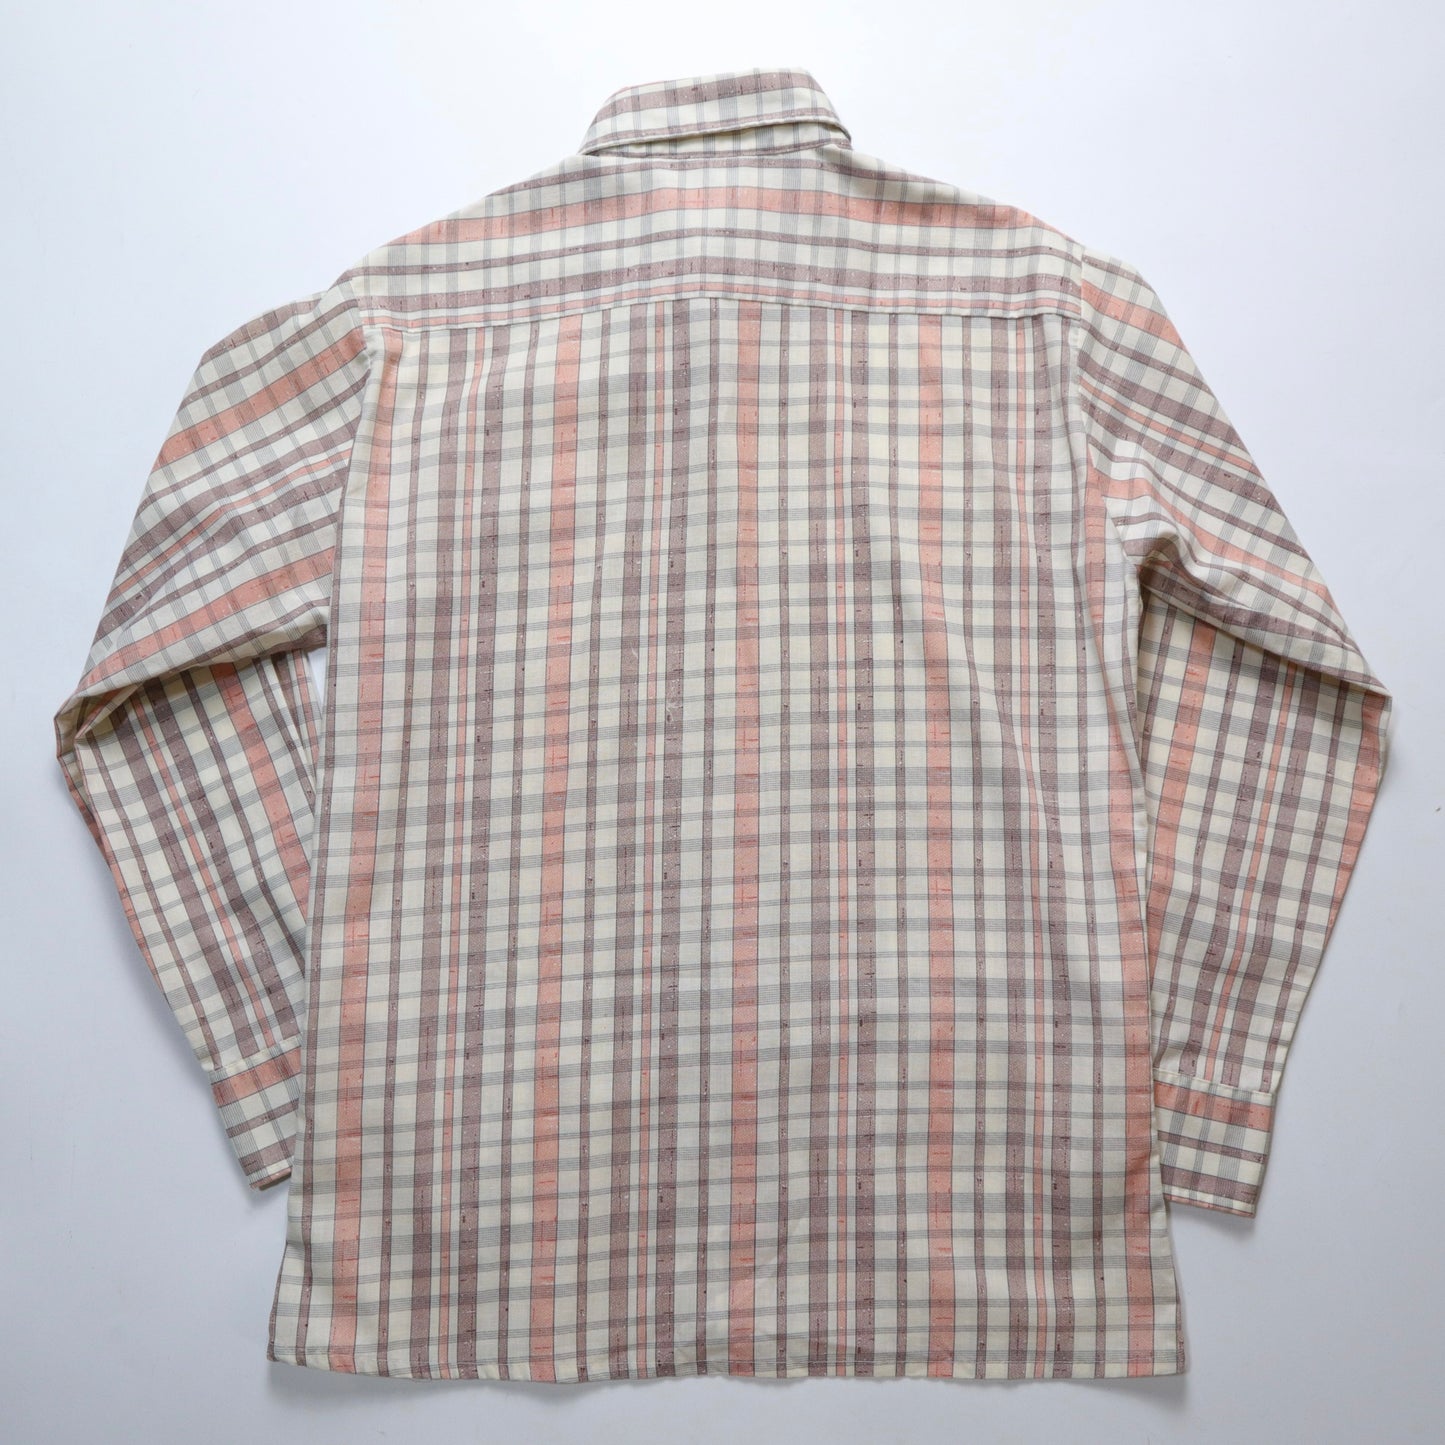 1970s Perma-Press pink and white plaid arrow collar shirt